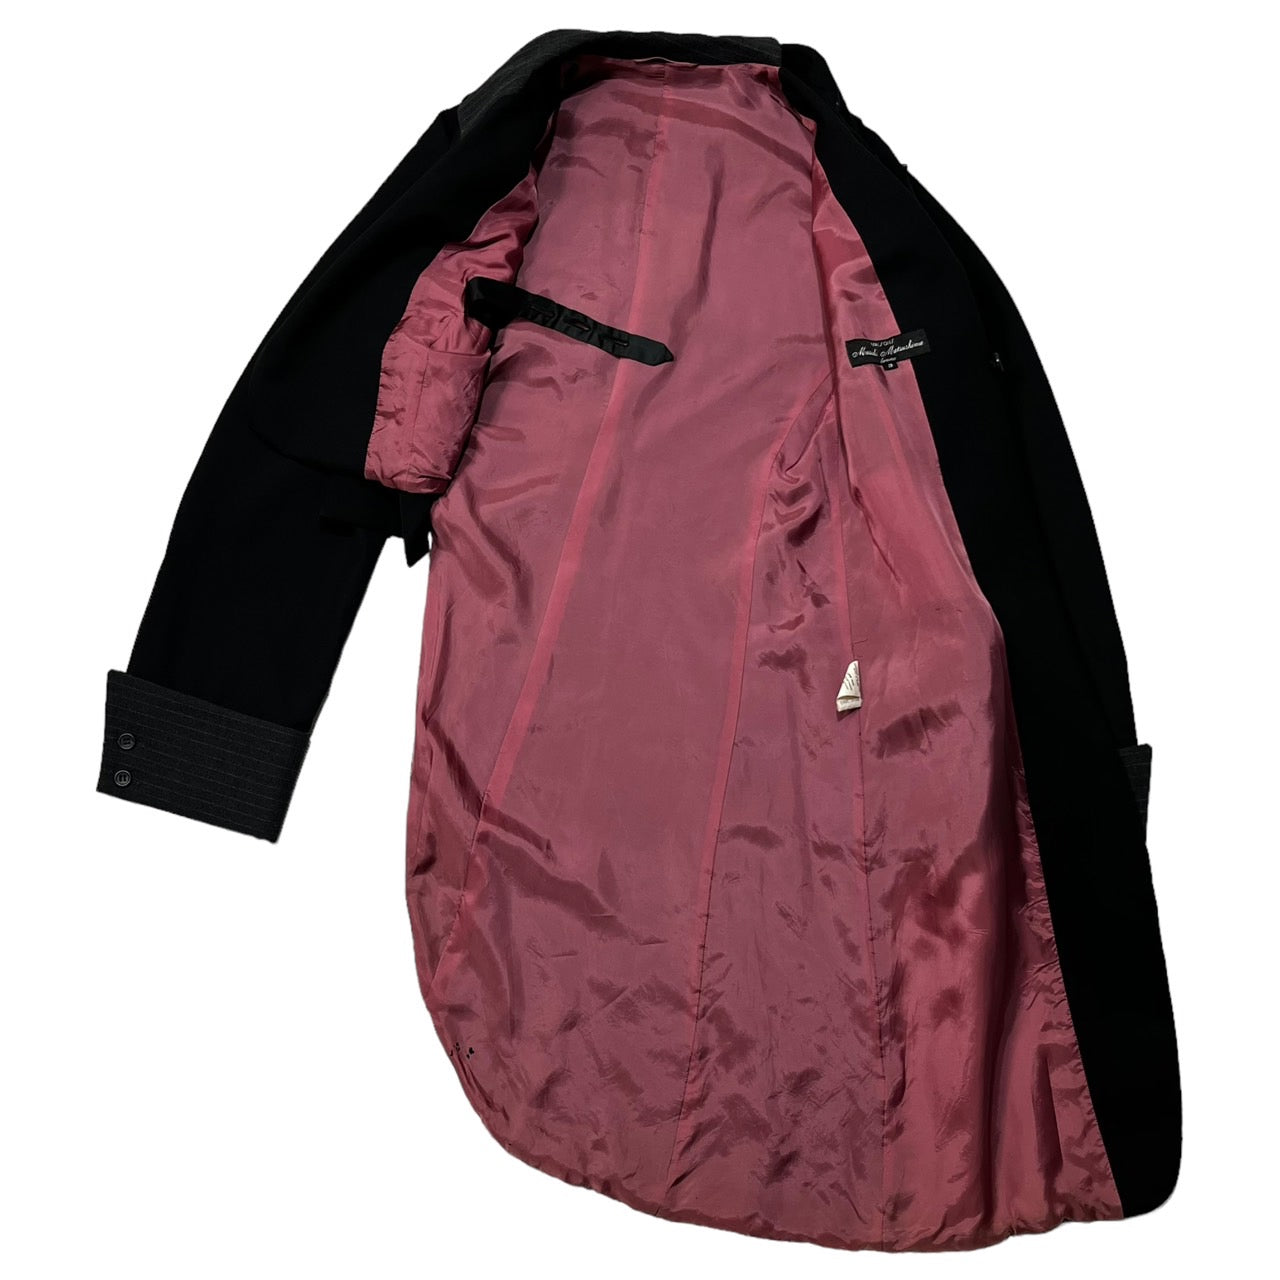 MASAKI MATSUSHIMA(マサキマツシマ) 90~00's asymmetric deformed wool jacket/アシンメトリー変形ウールジャケット MHSC-3003 SIZE 3(L) ブラック×グレー 虫食い箇所有